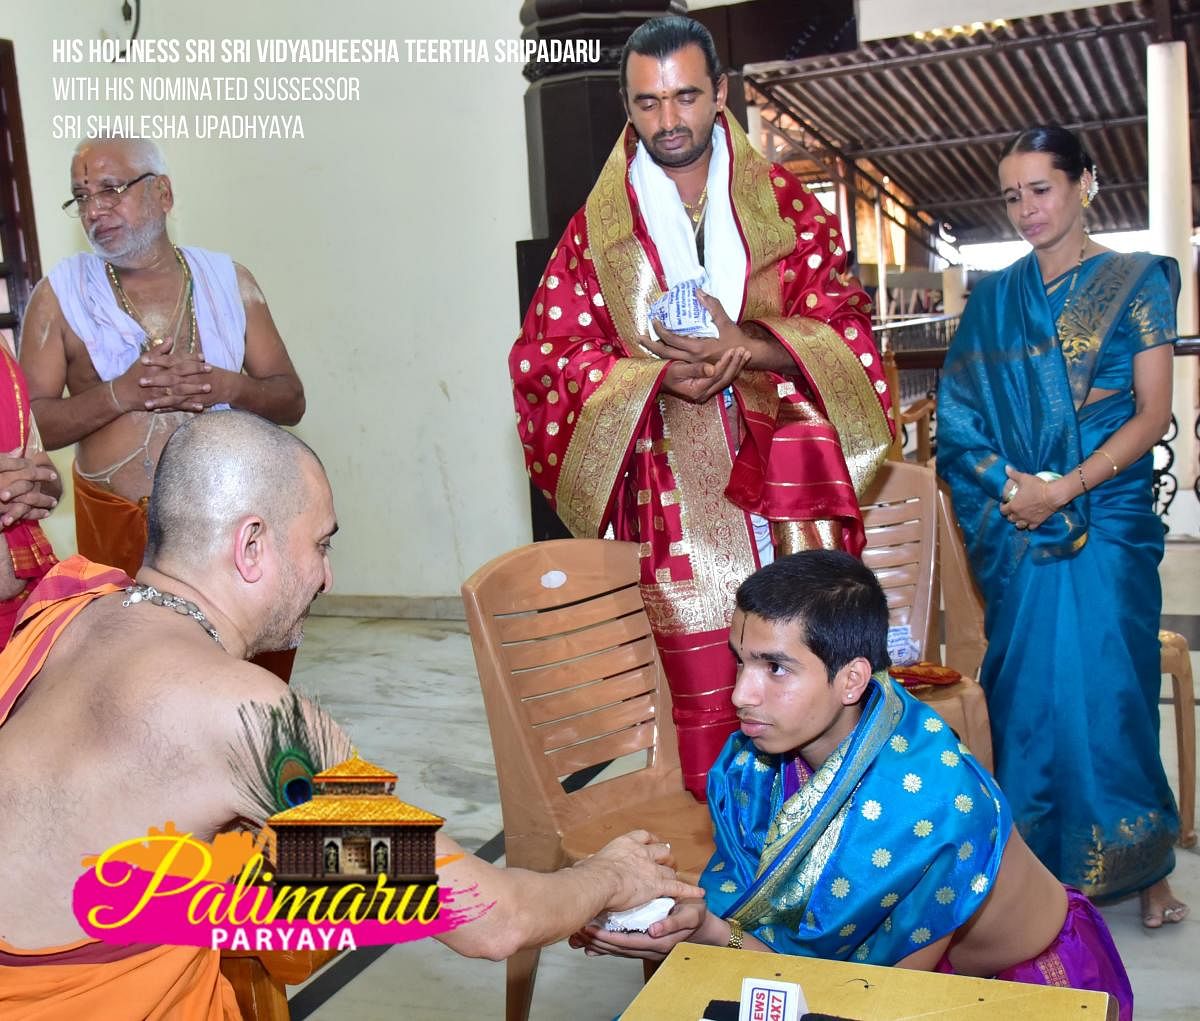 Shailesh Upadhyaya receives blessings from Vidyadheesha Teertha. Photo / Palimaru Matha